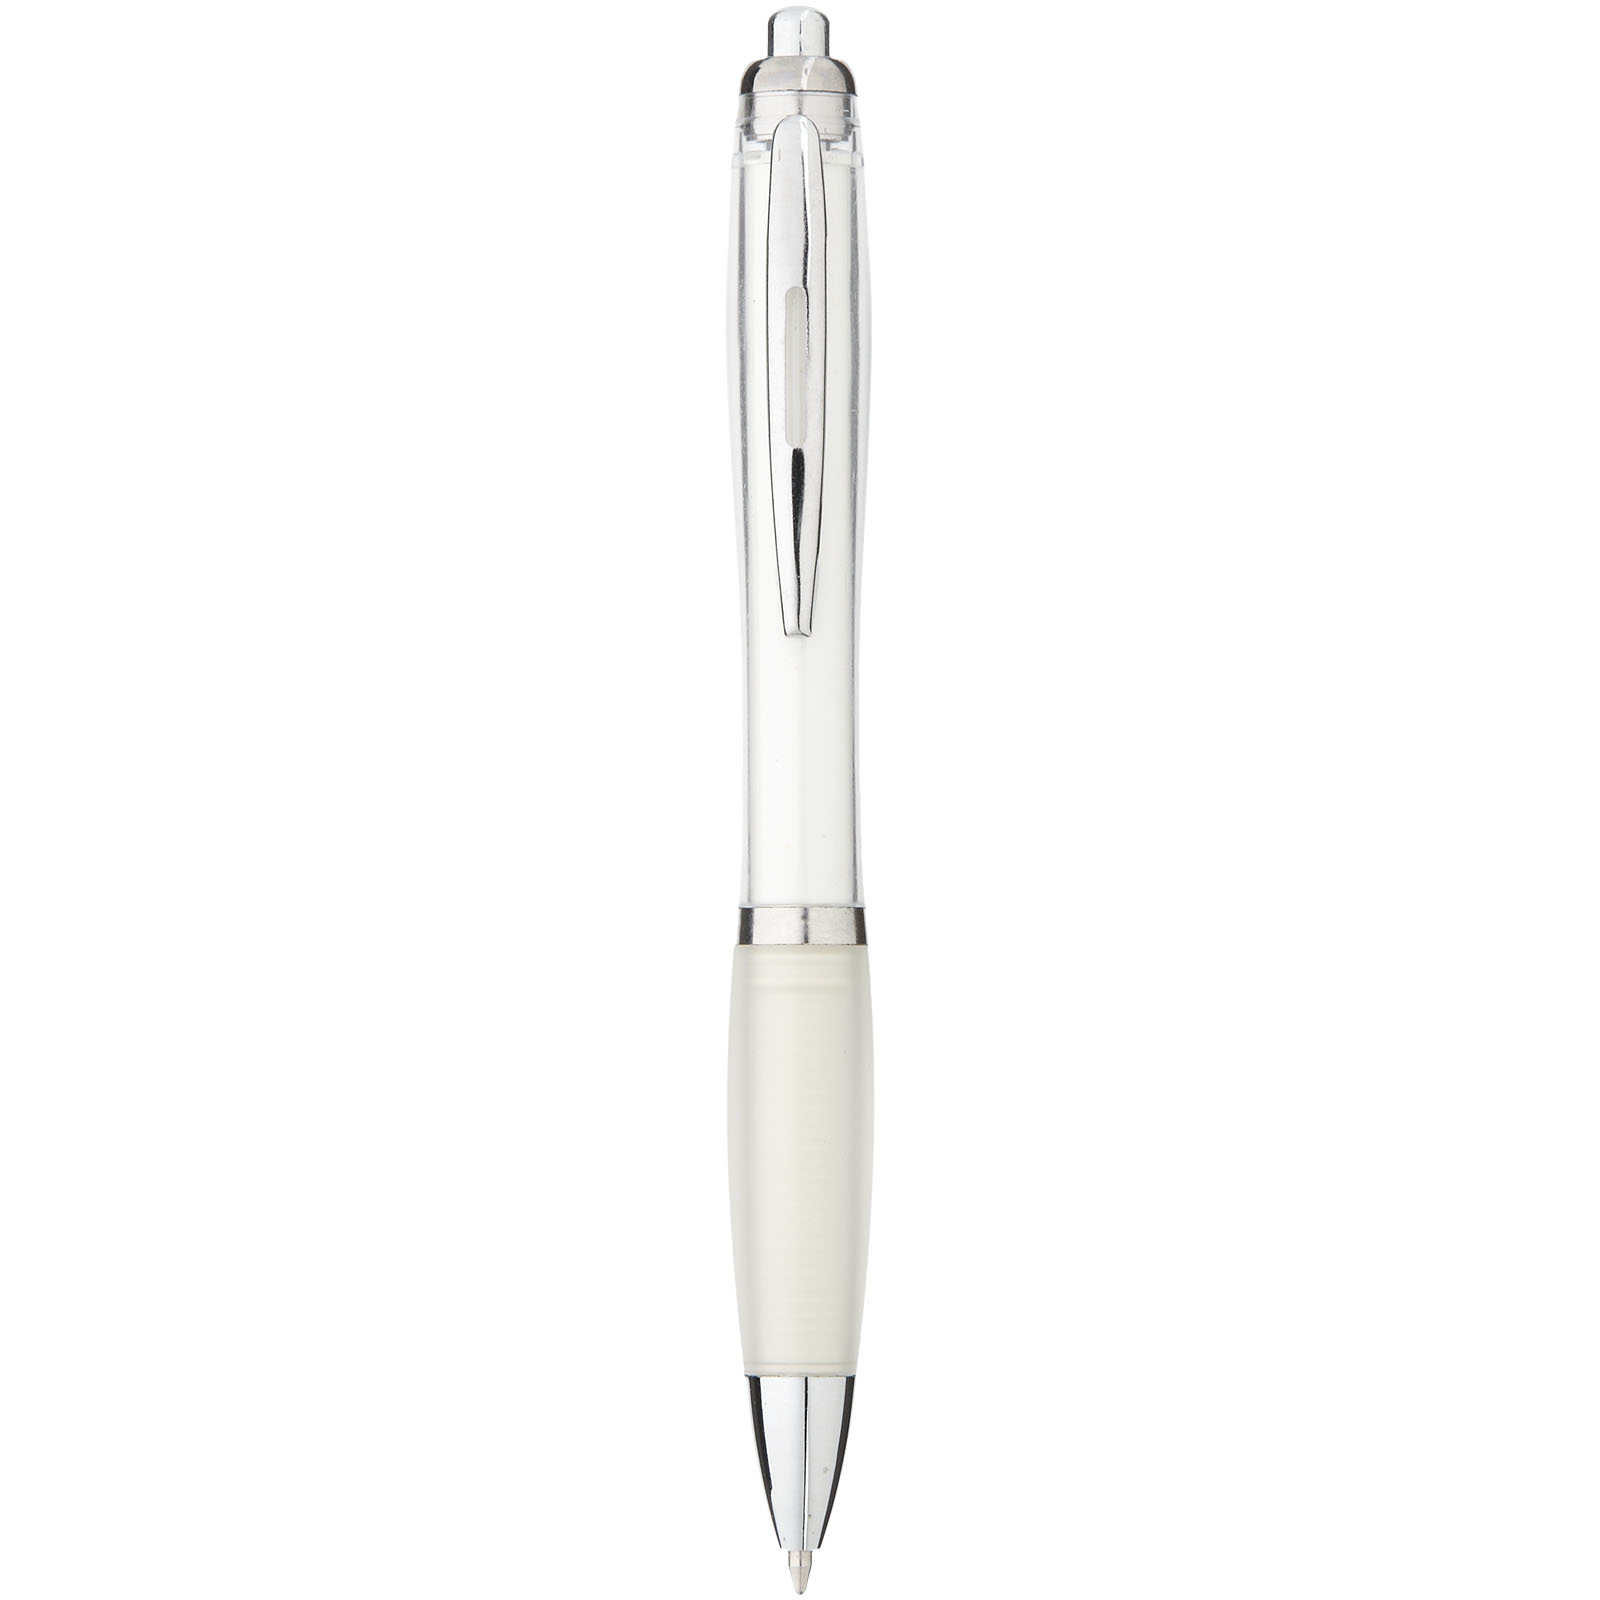 Advertising Ballpoint Pens - Nash ballpoint pen coloured barrel and grip - 1